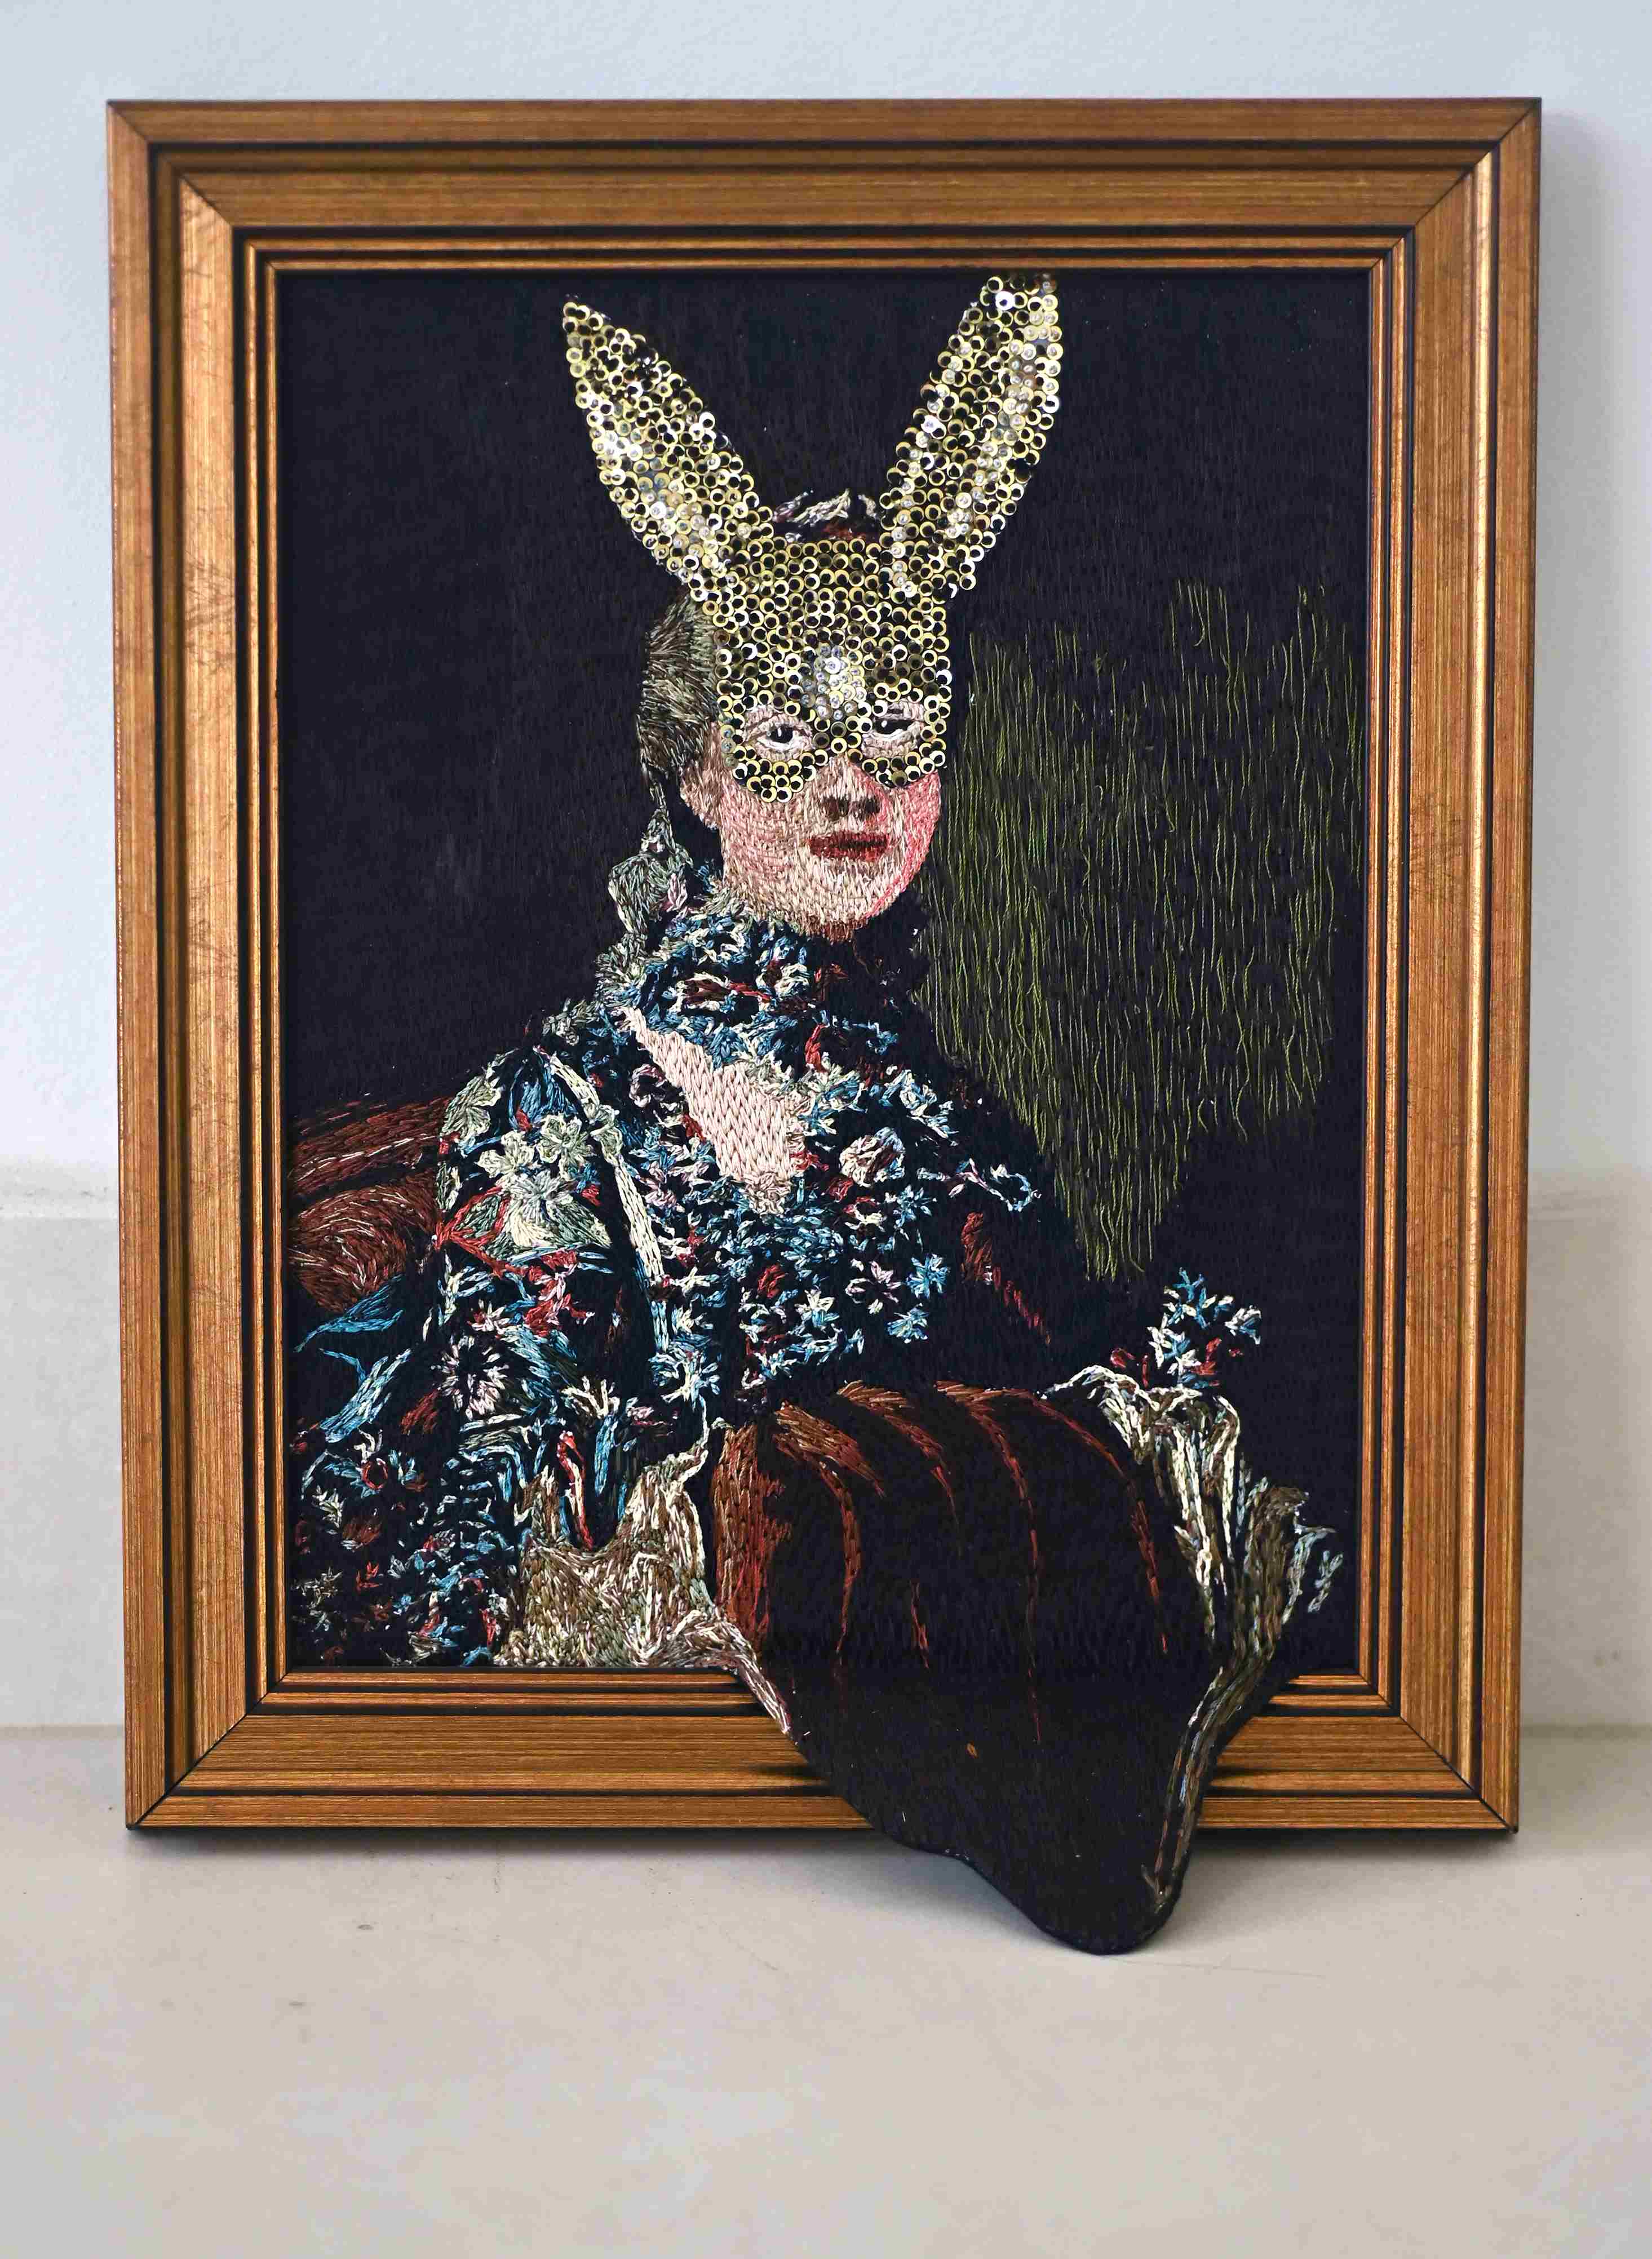 Artist: Marium Agha<br>Name: Woman Who Play<br>Medium: Thread on fabric<br> Size: 10 x 15 inches